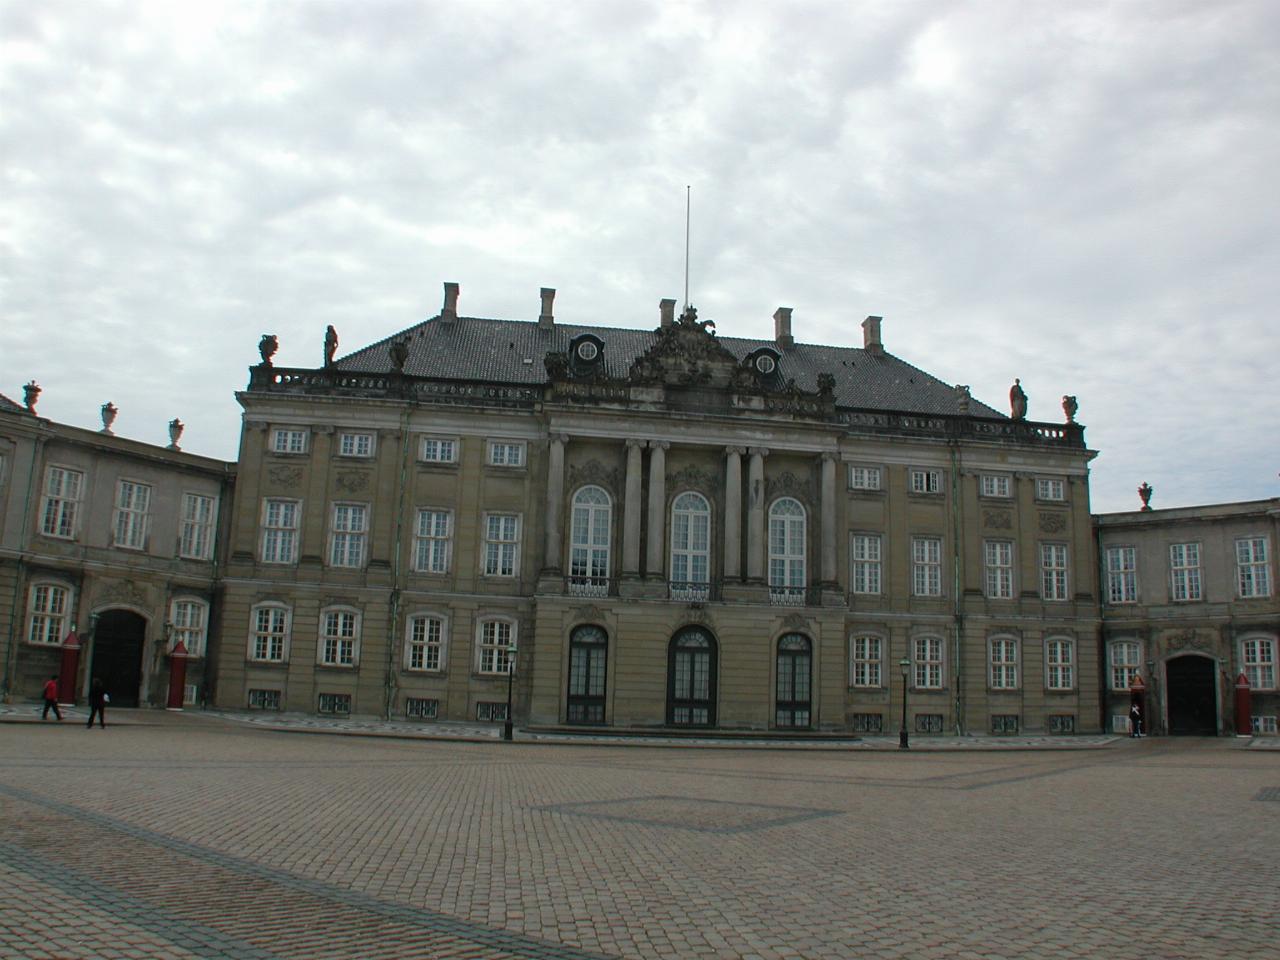 KPLU Viking Jazz: Amelienborg Plads (Plaza): Christian IX's Palace (panorama 3/4)